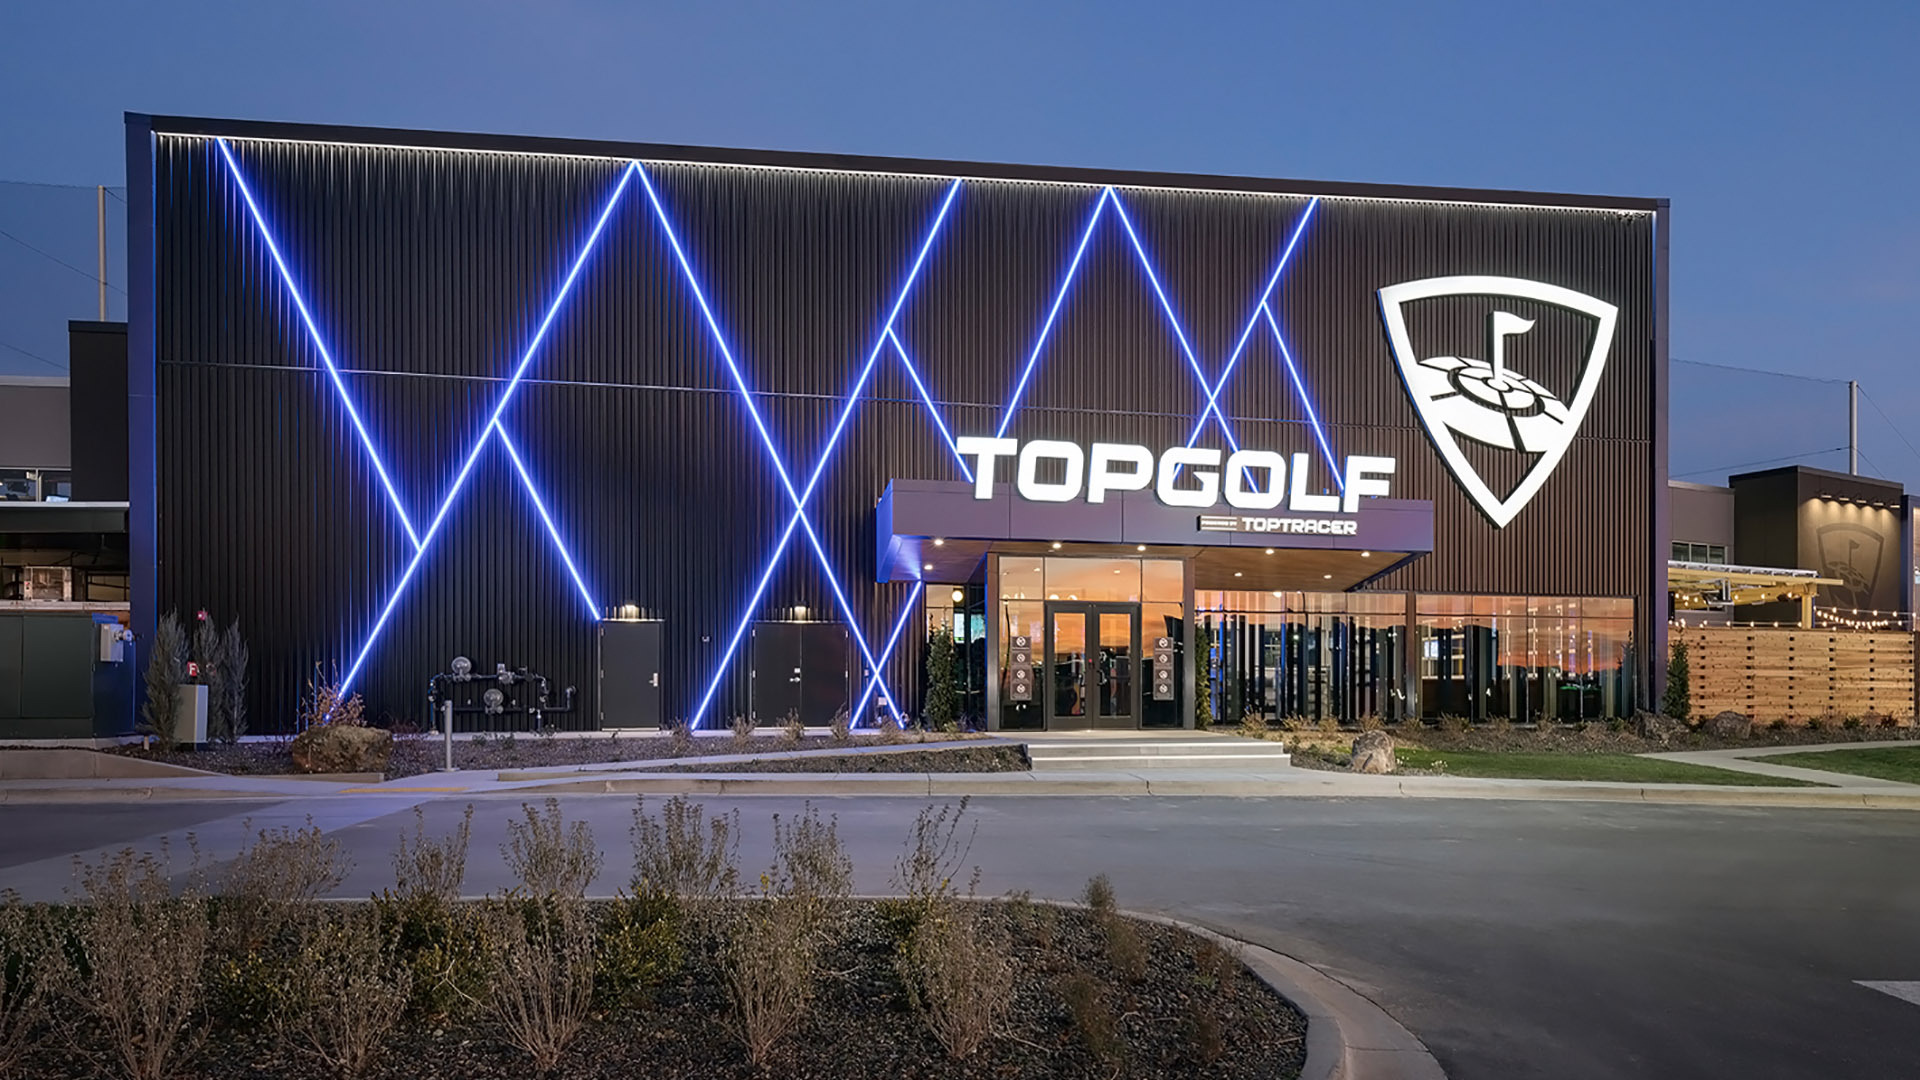 Exterior of Topgolf Mobile